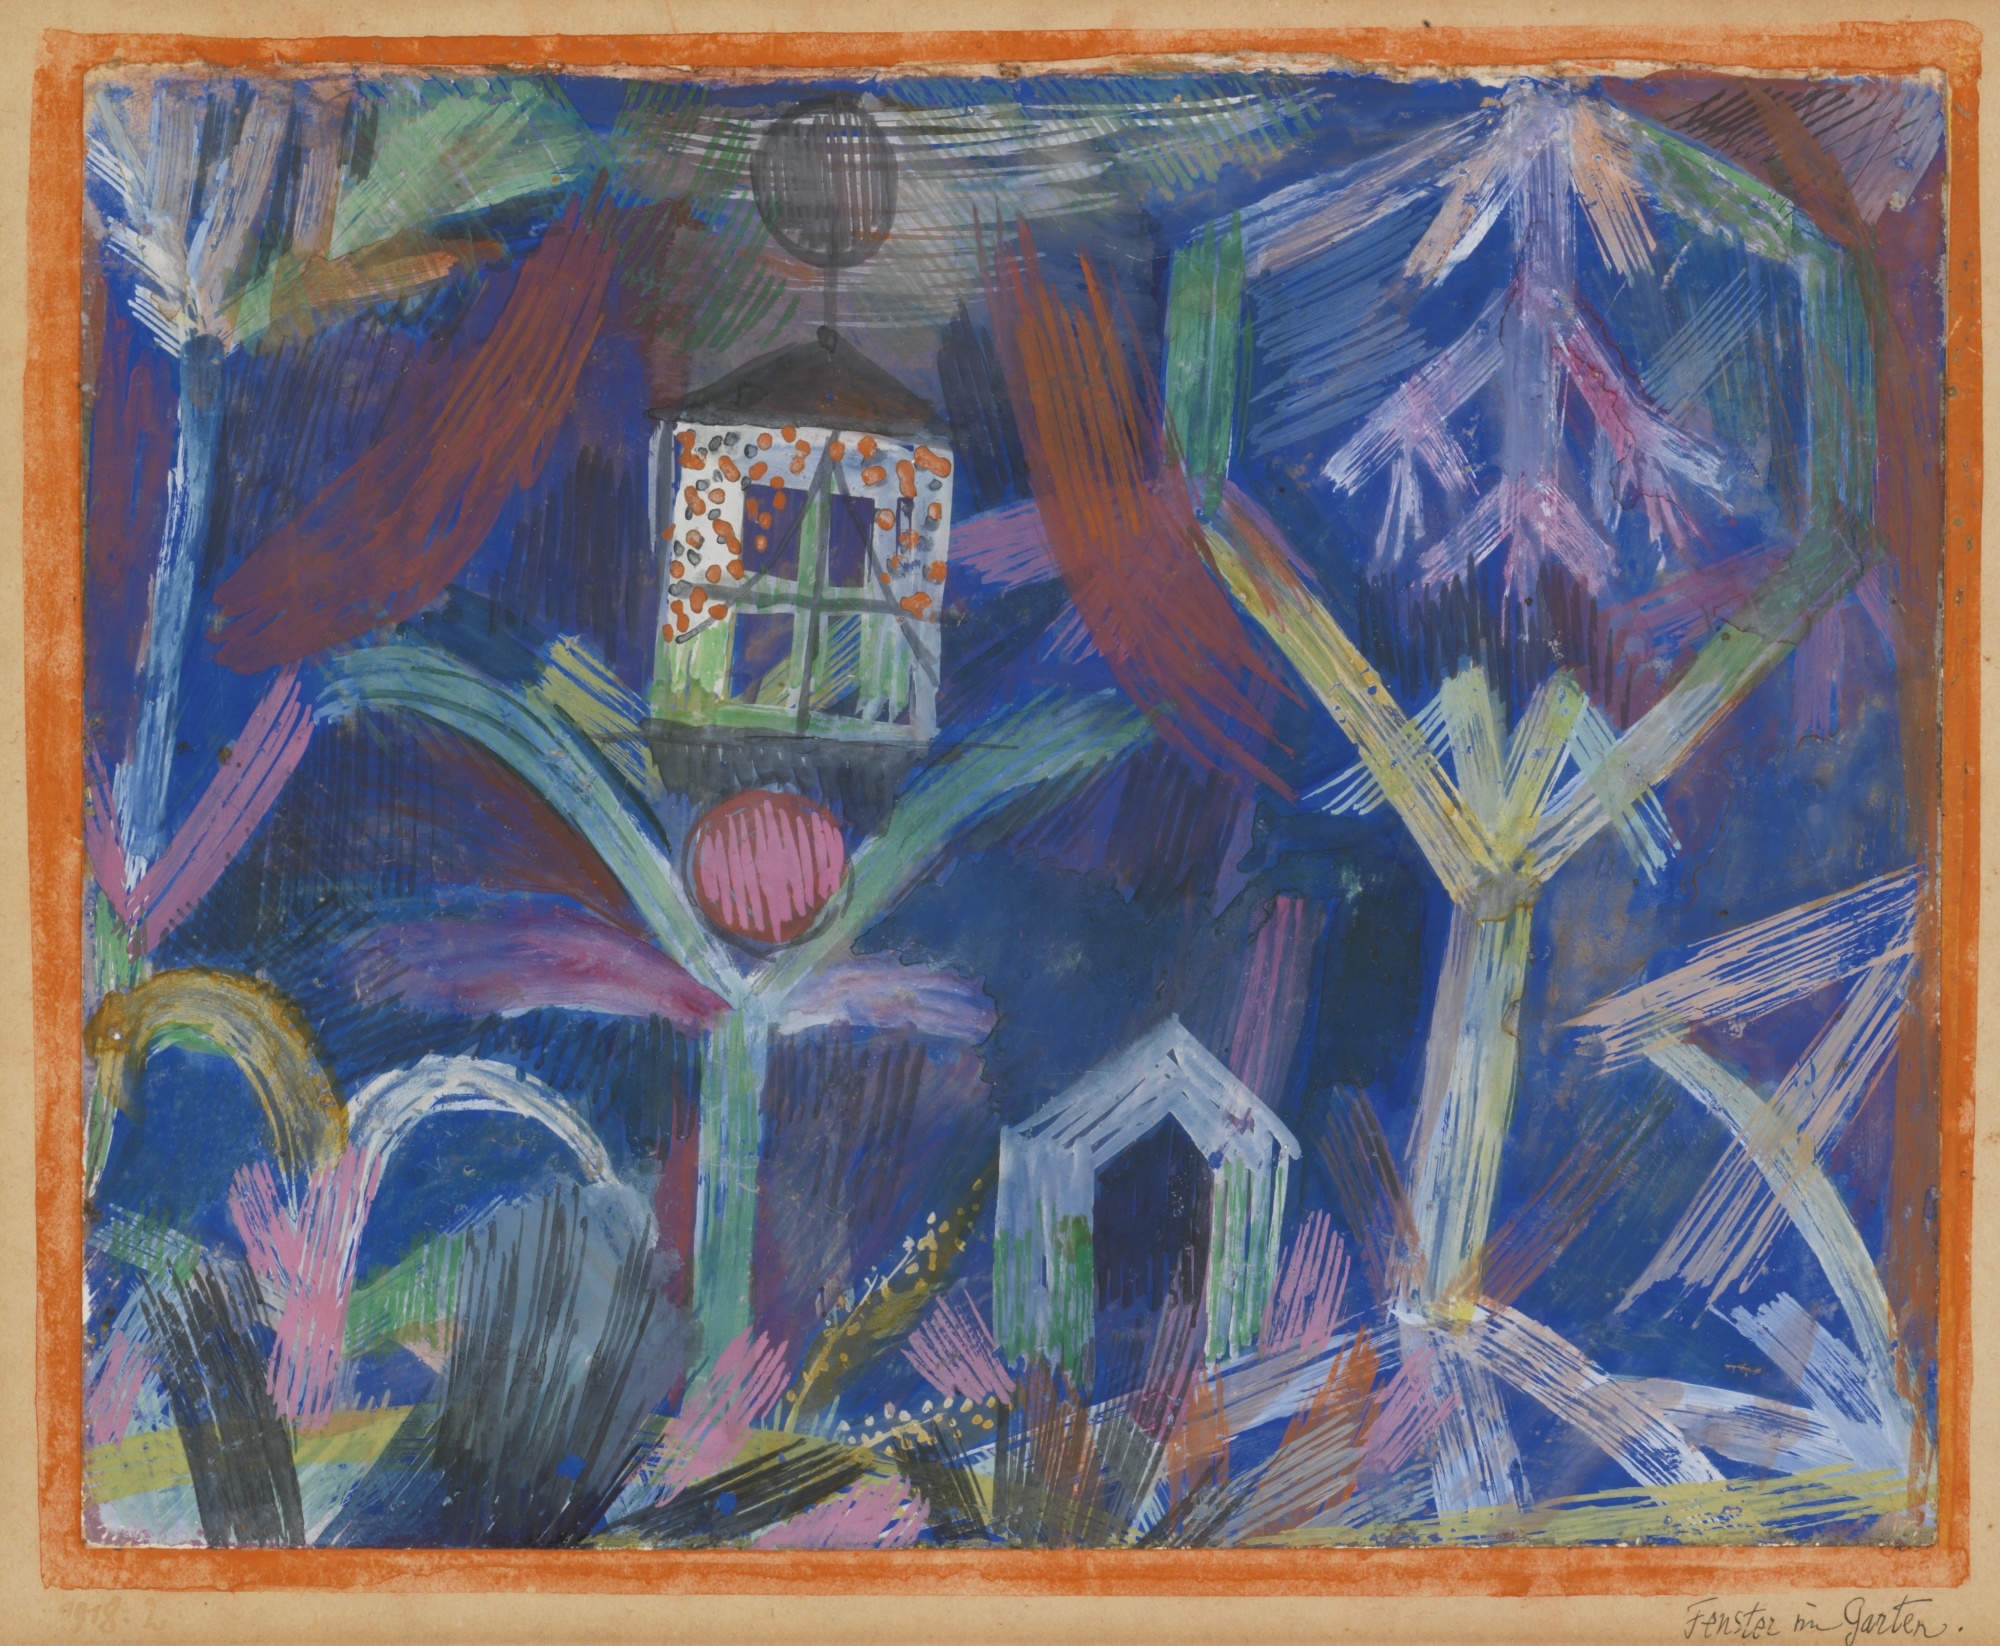 FENSTER IM GARTEN (WINDOW IN THE GARDEN) by Paul Klee, 1918